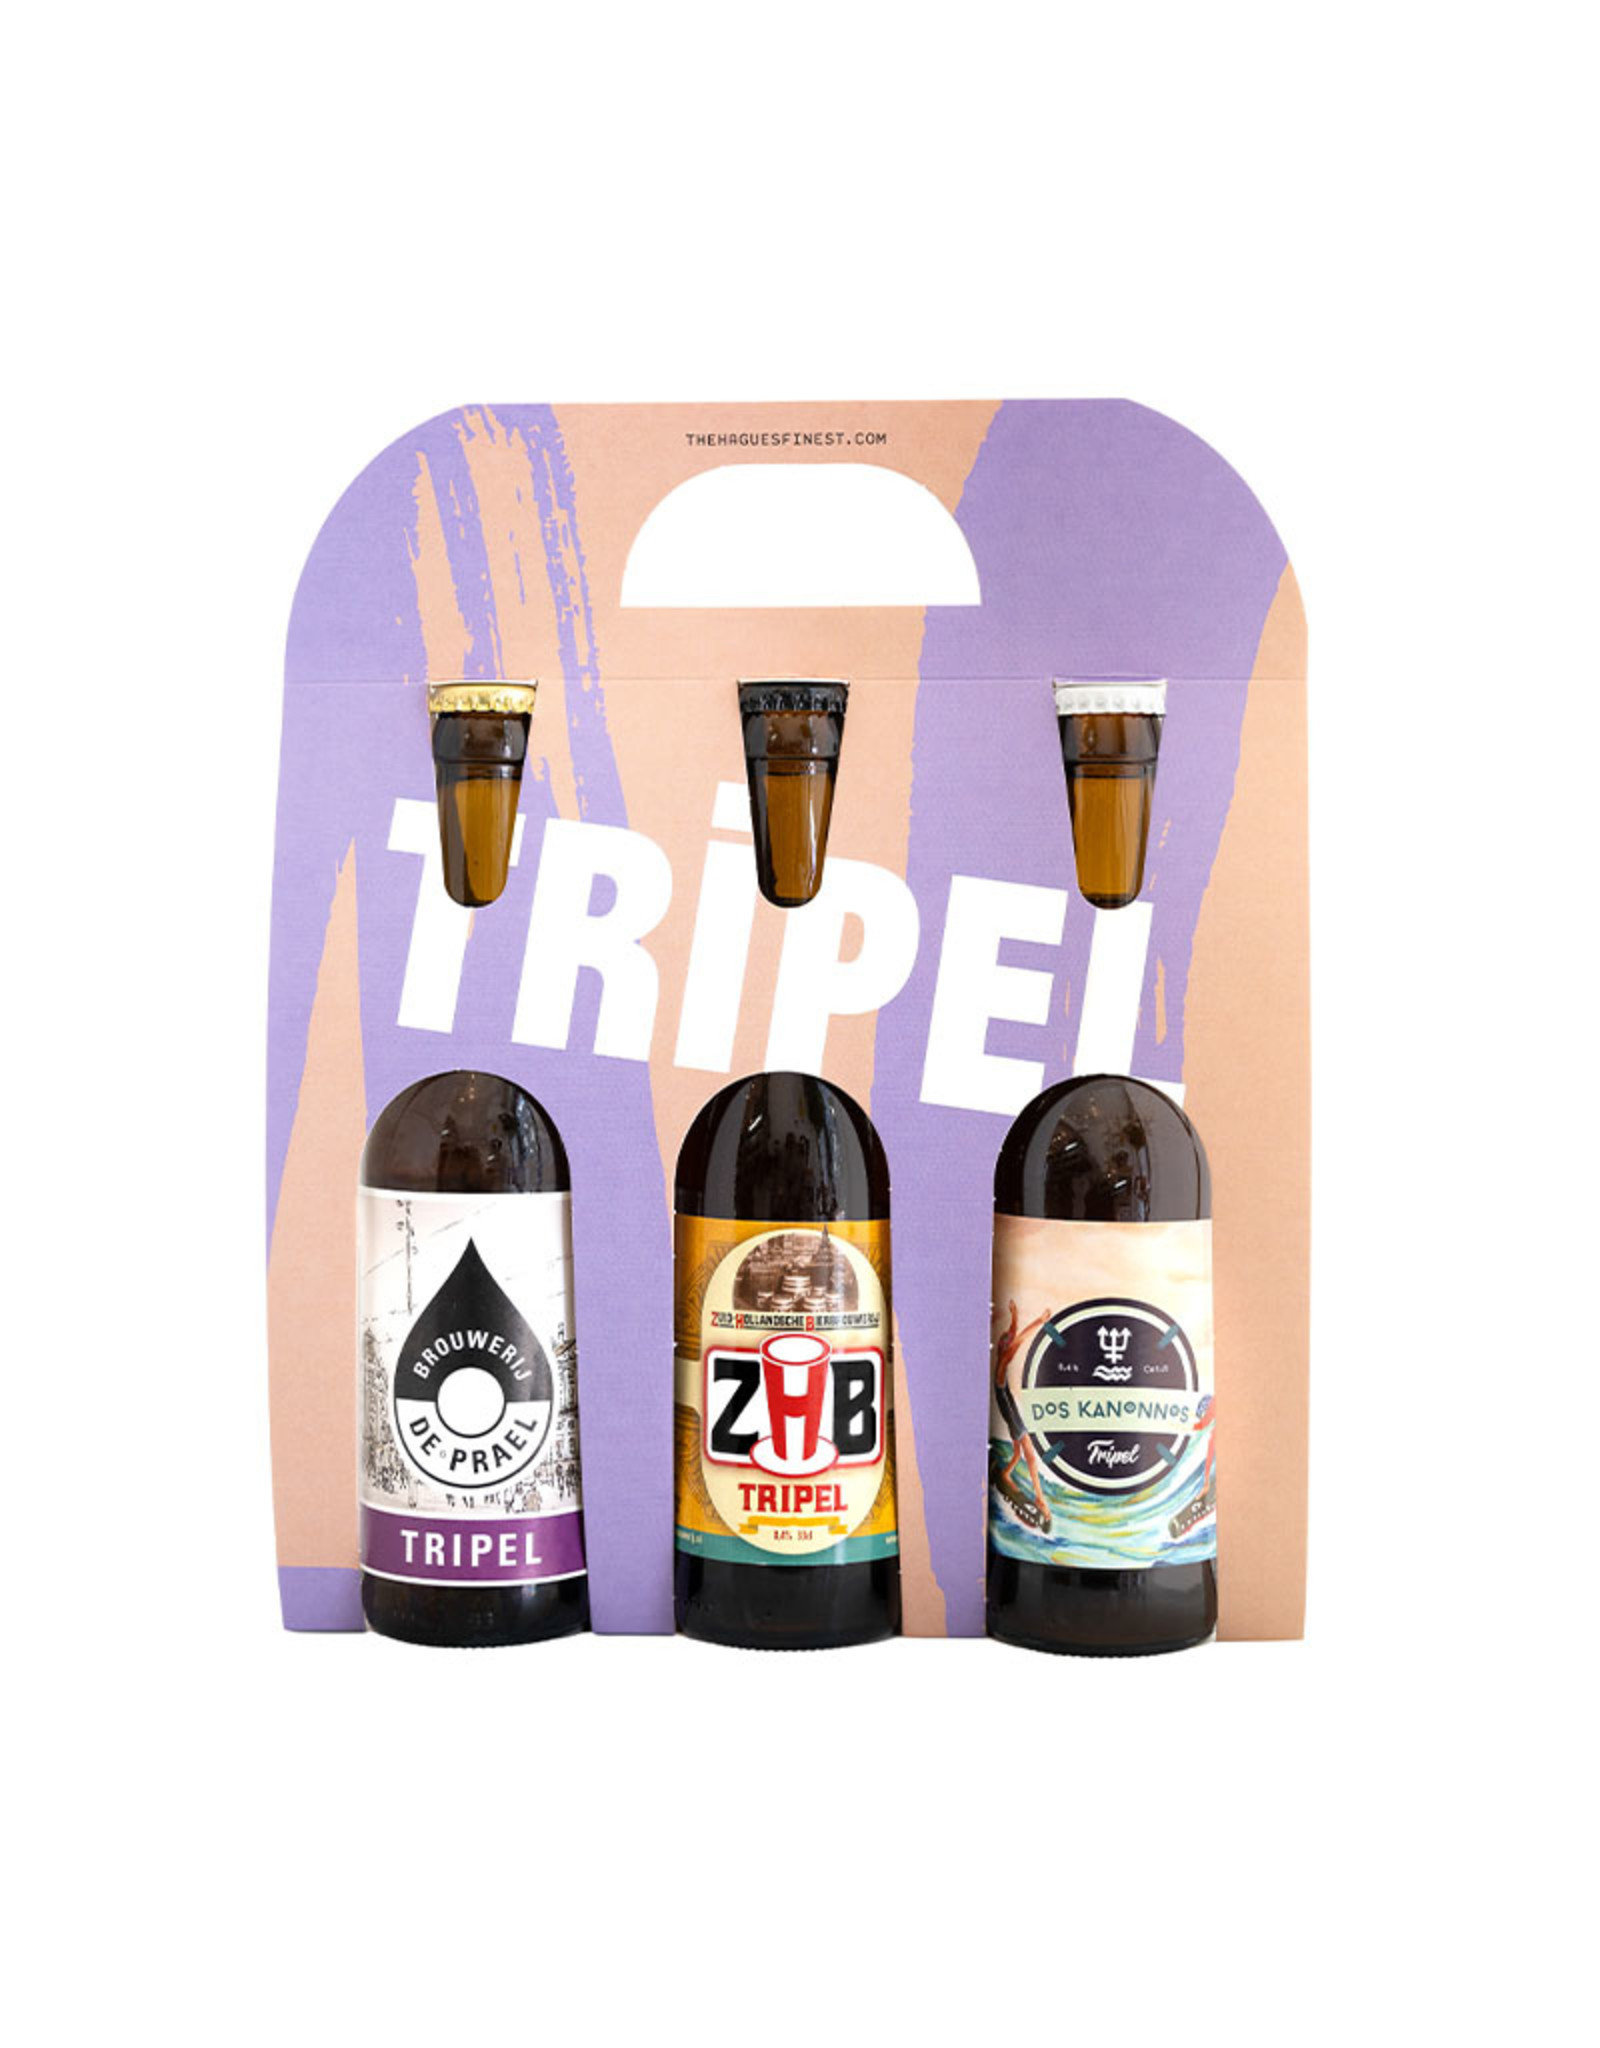 The Hague's Finest Bierpakket Tripel - 3 pack